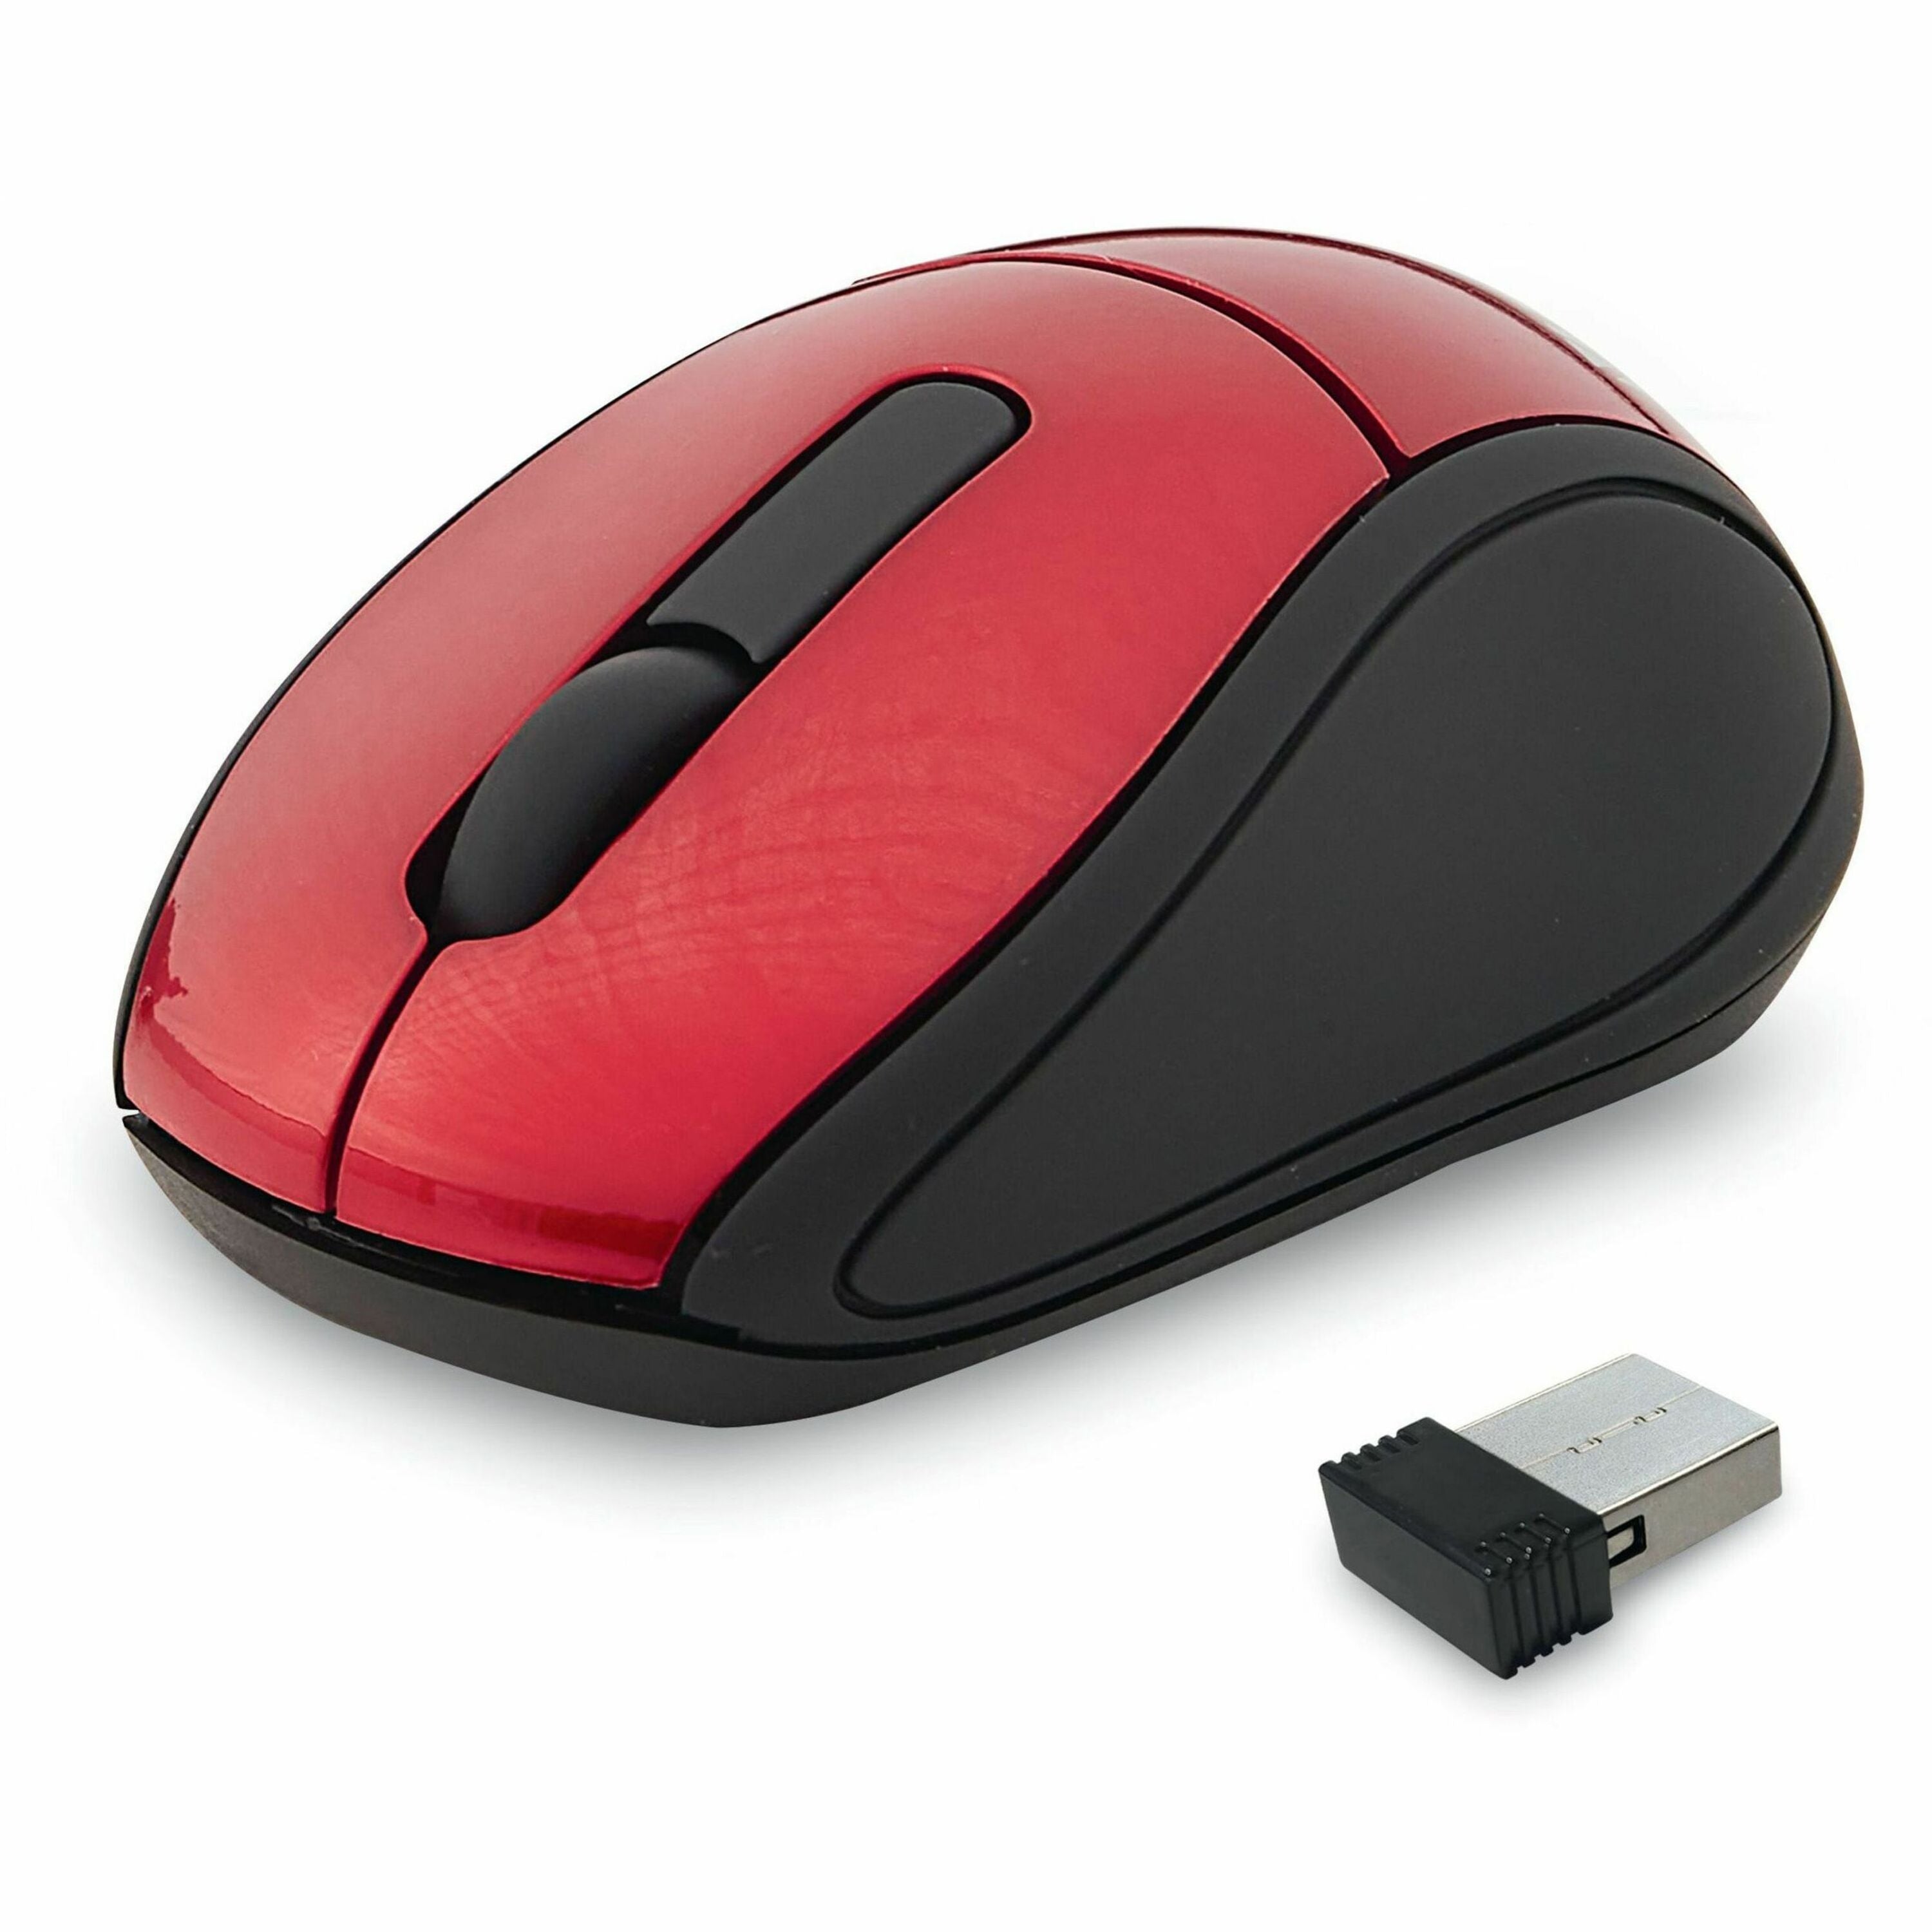 Verbatim Wireless Mini Travel Optical Mouse - Red - Radio Frequency - USB - 1600 dpi - Scroll Wheel - 